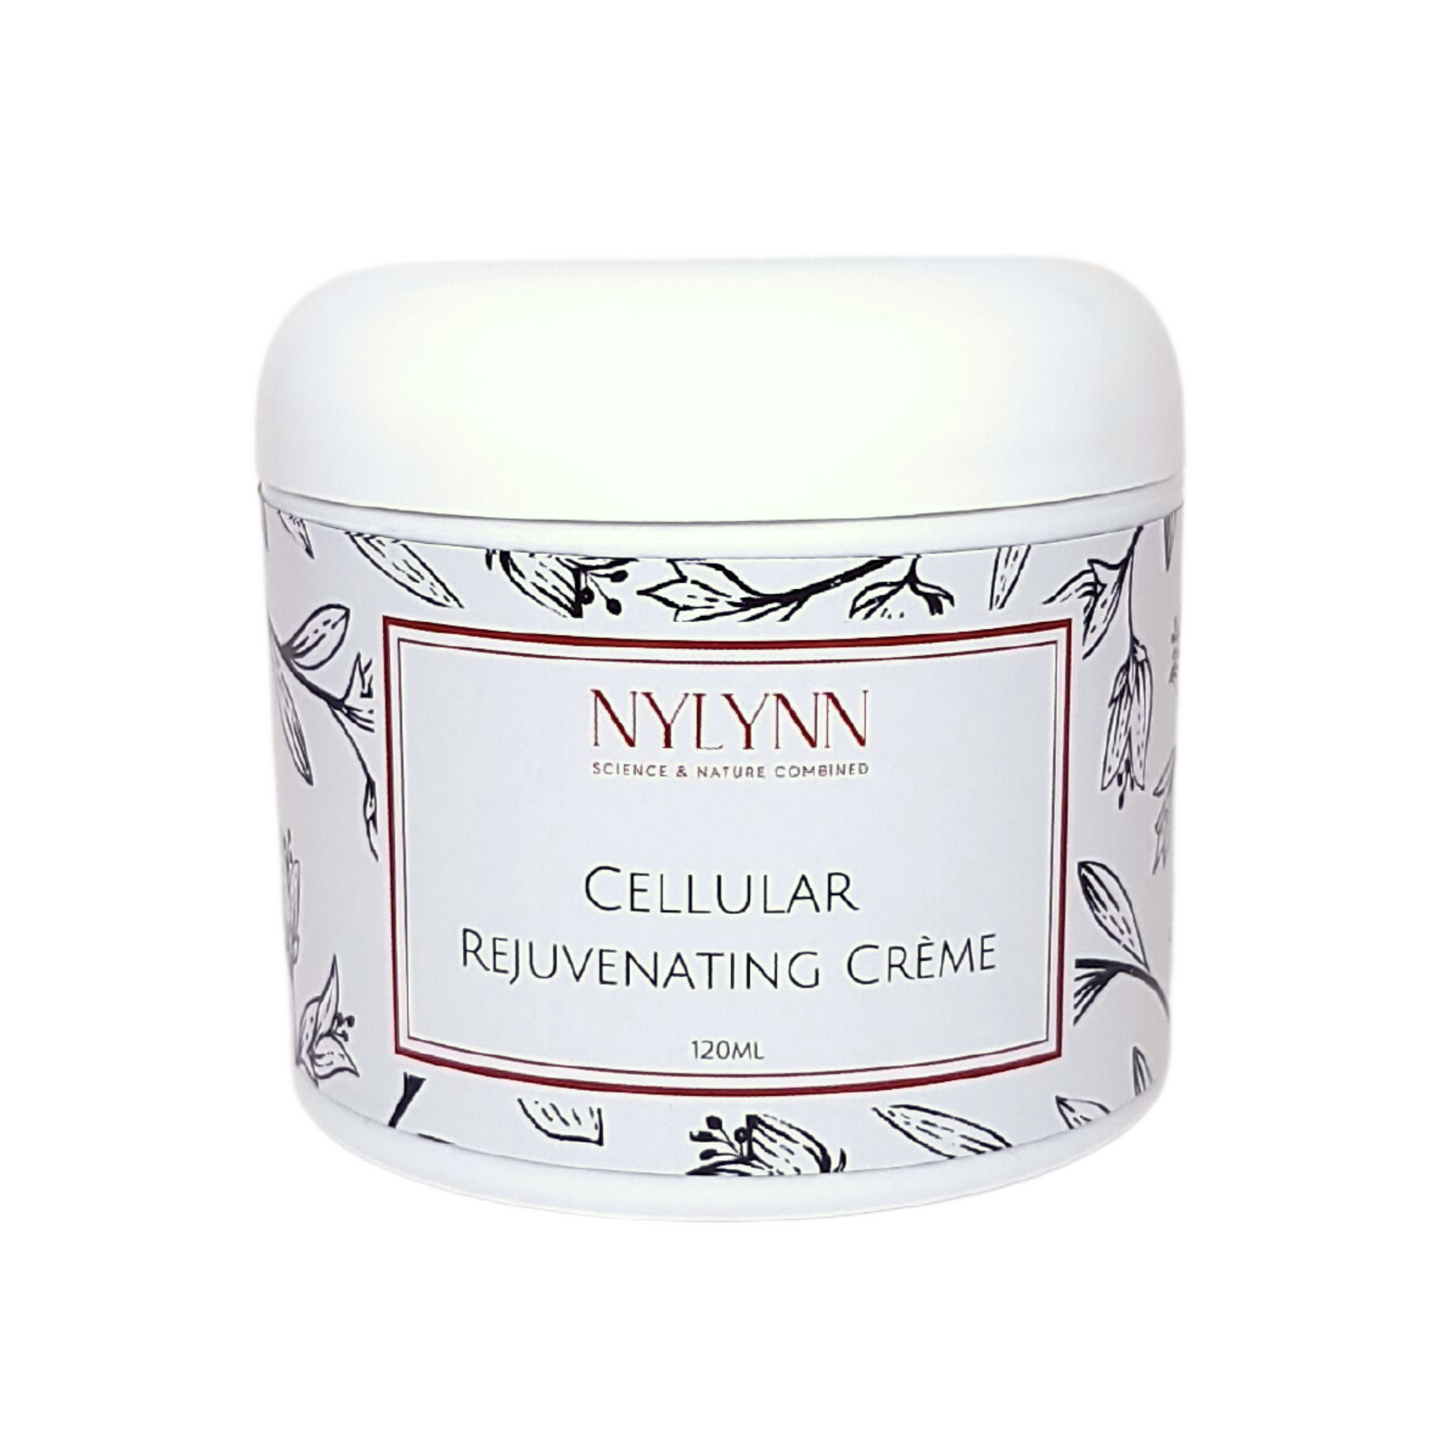 Cellular Rejuvenating Crème